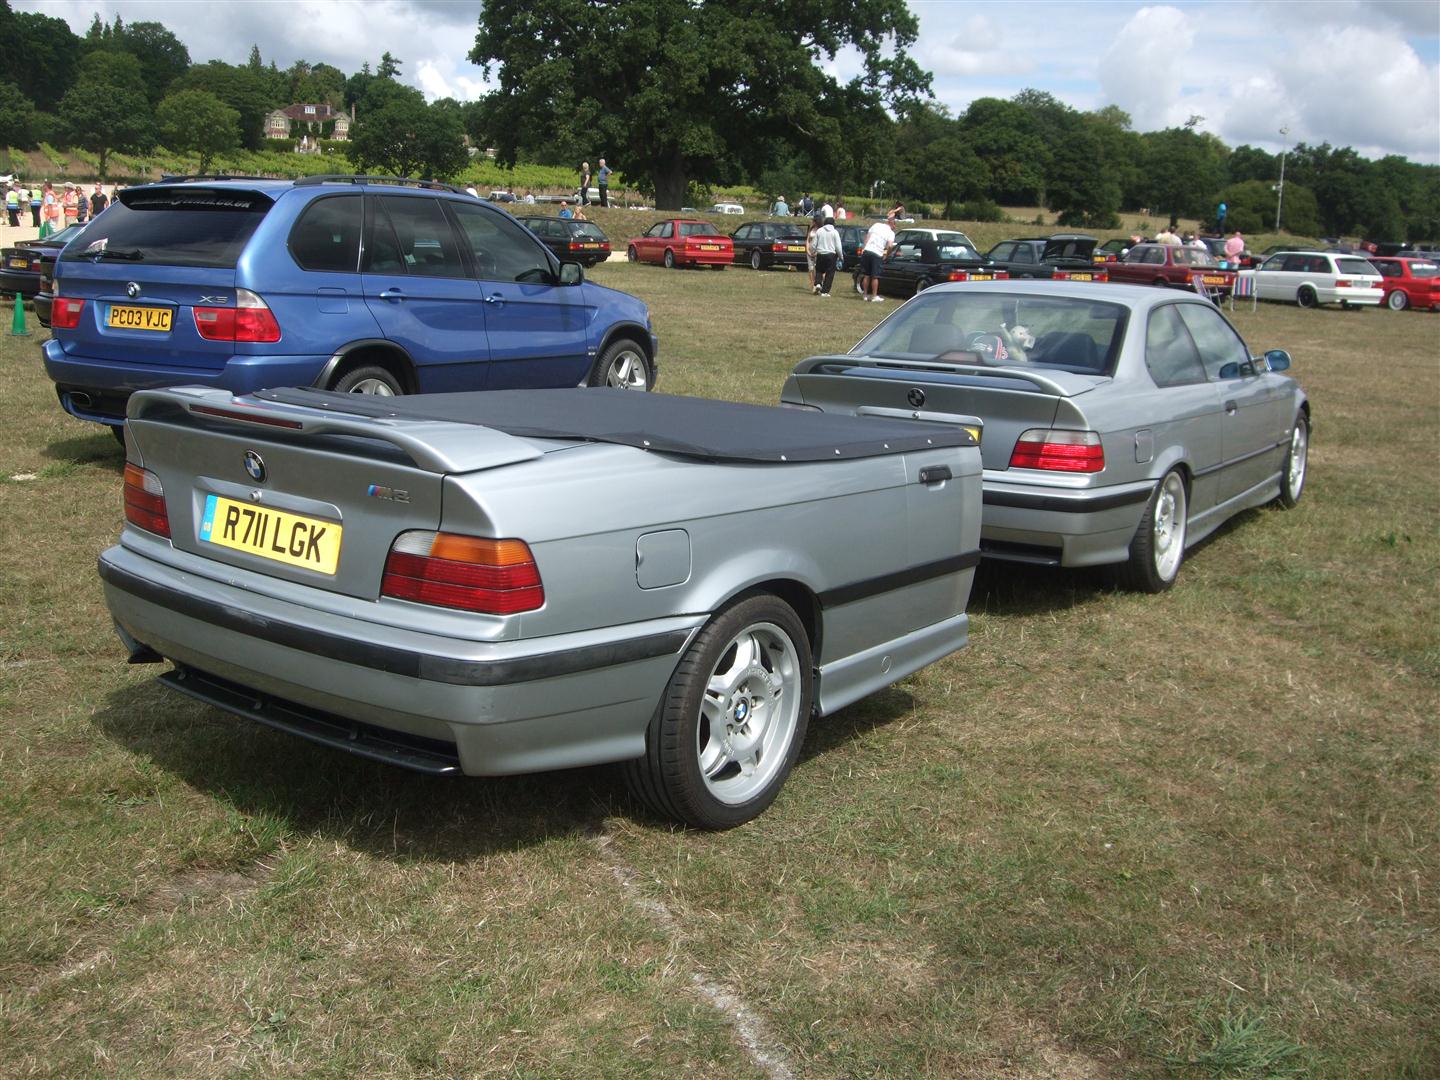 BMW série 3 1997 avec remorque / Flickr - Partage de photos!